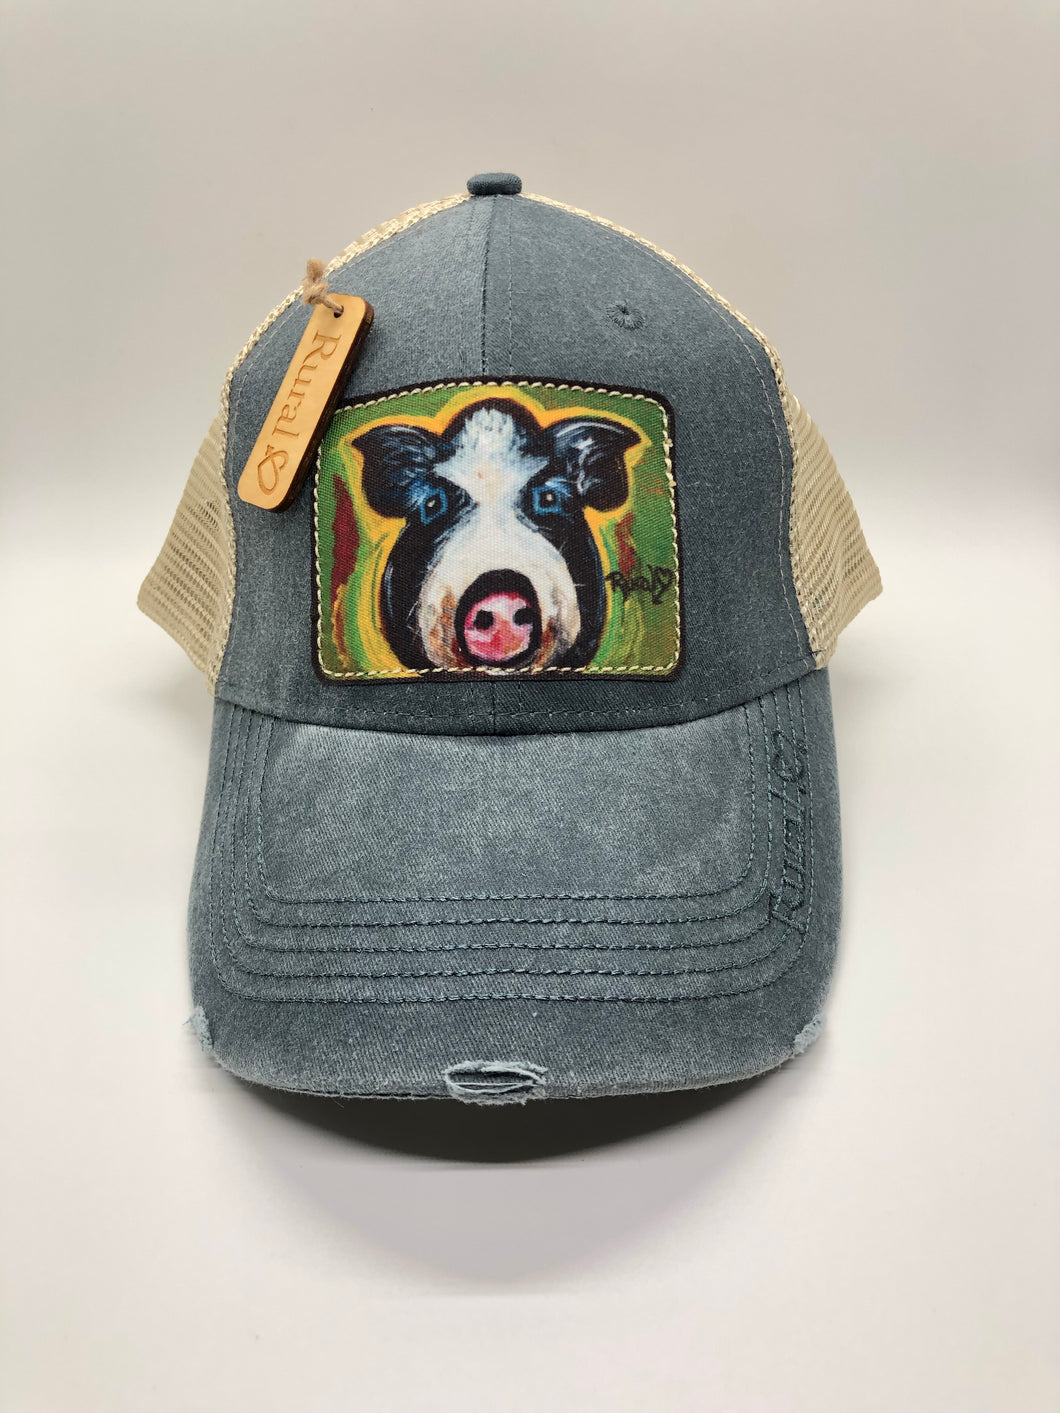 Rural Heart by Rene Earnhardt “Sheeza Sunshine” ball cap in denim or teal hat with Velcro closure